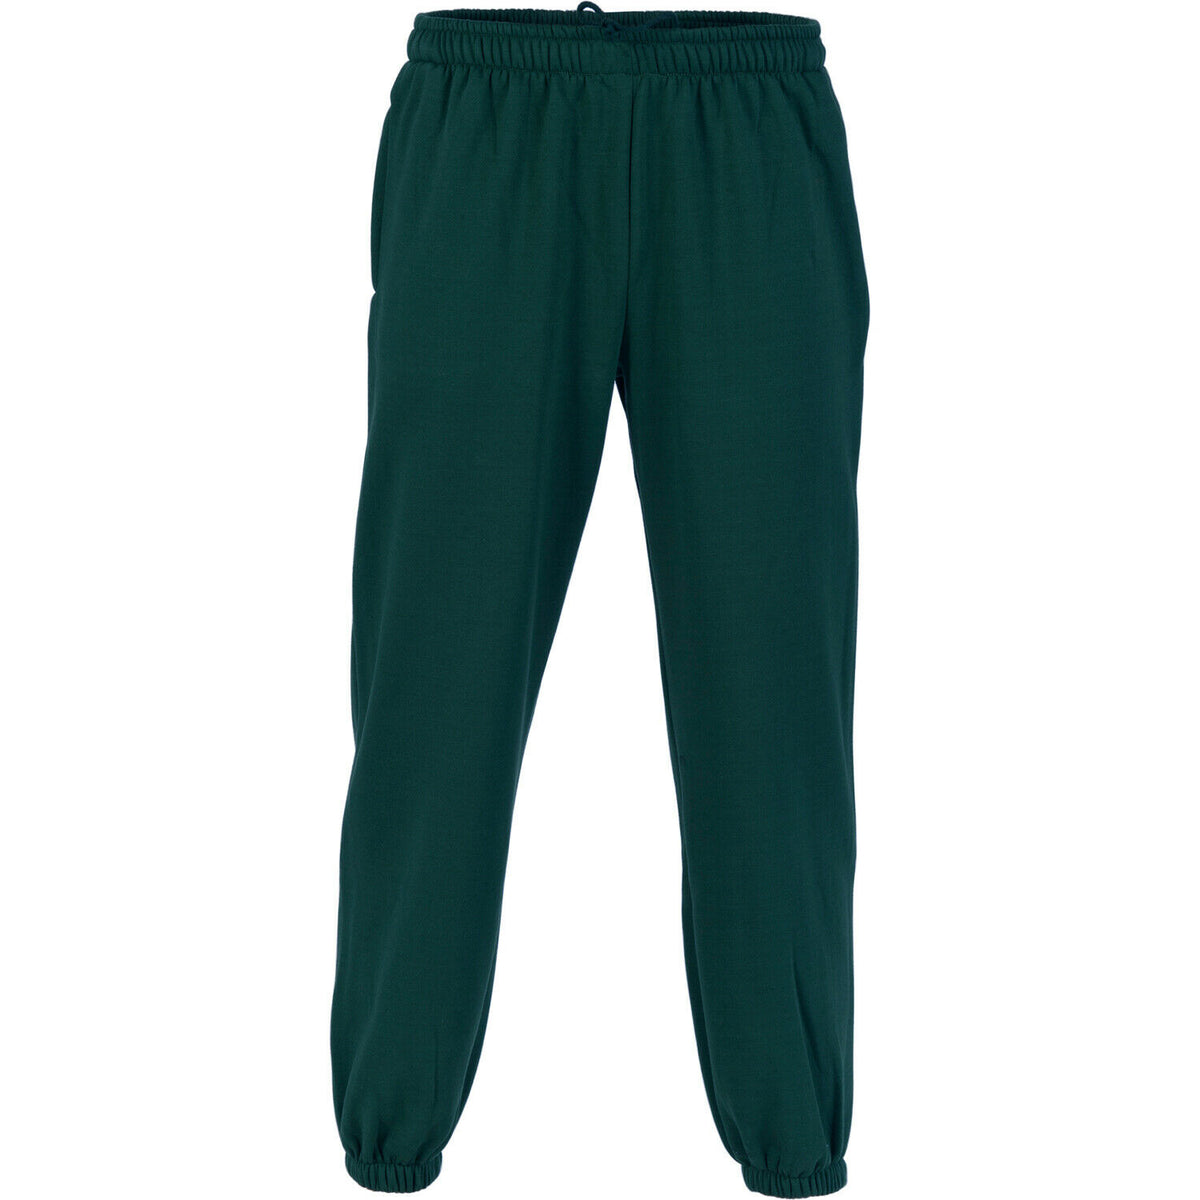 DNC Workwear Mens Poly/Cotton Fleecy Track Pants Comfortable Work 5401